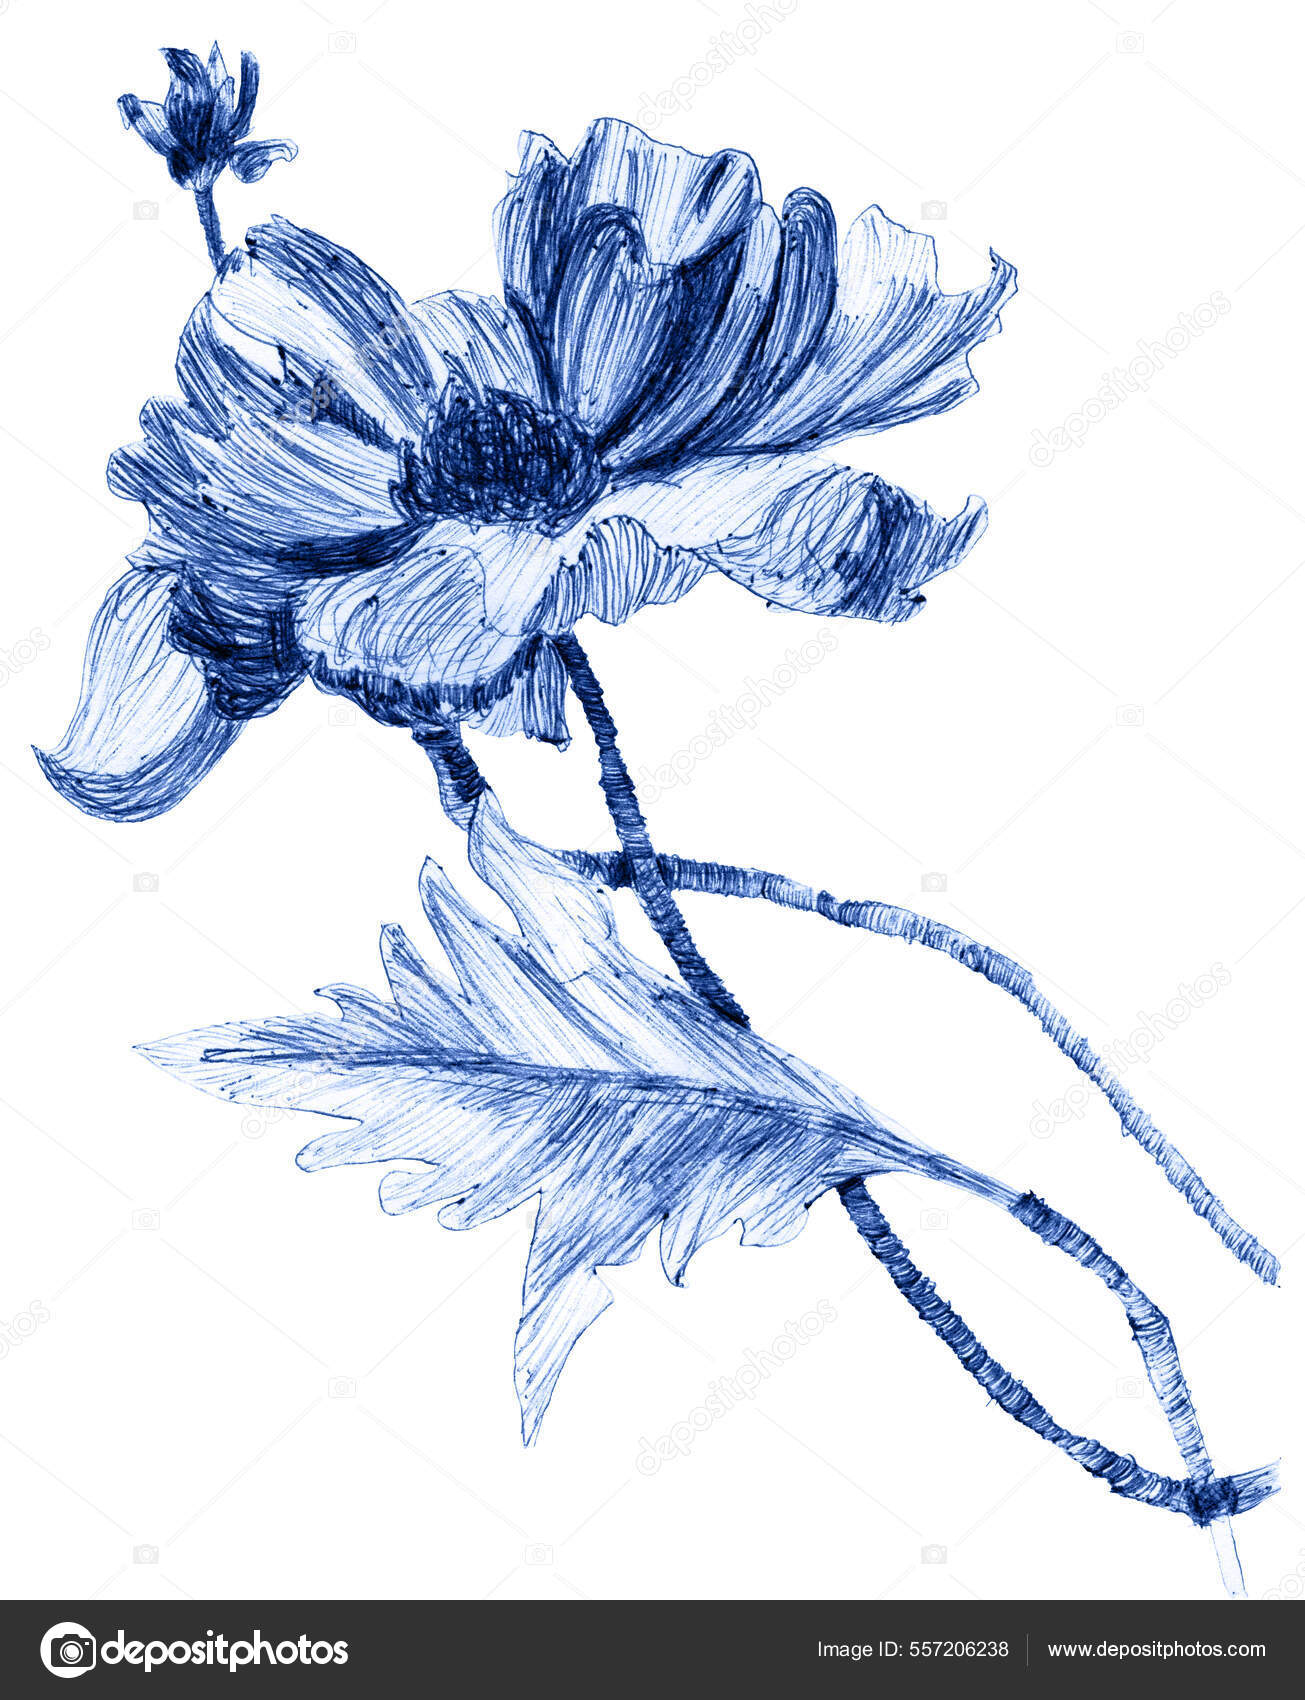 Flower Sketch by ksaison on Dribbble